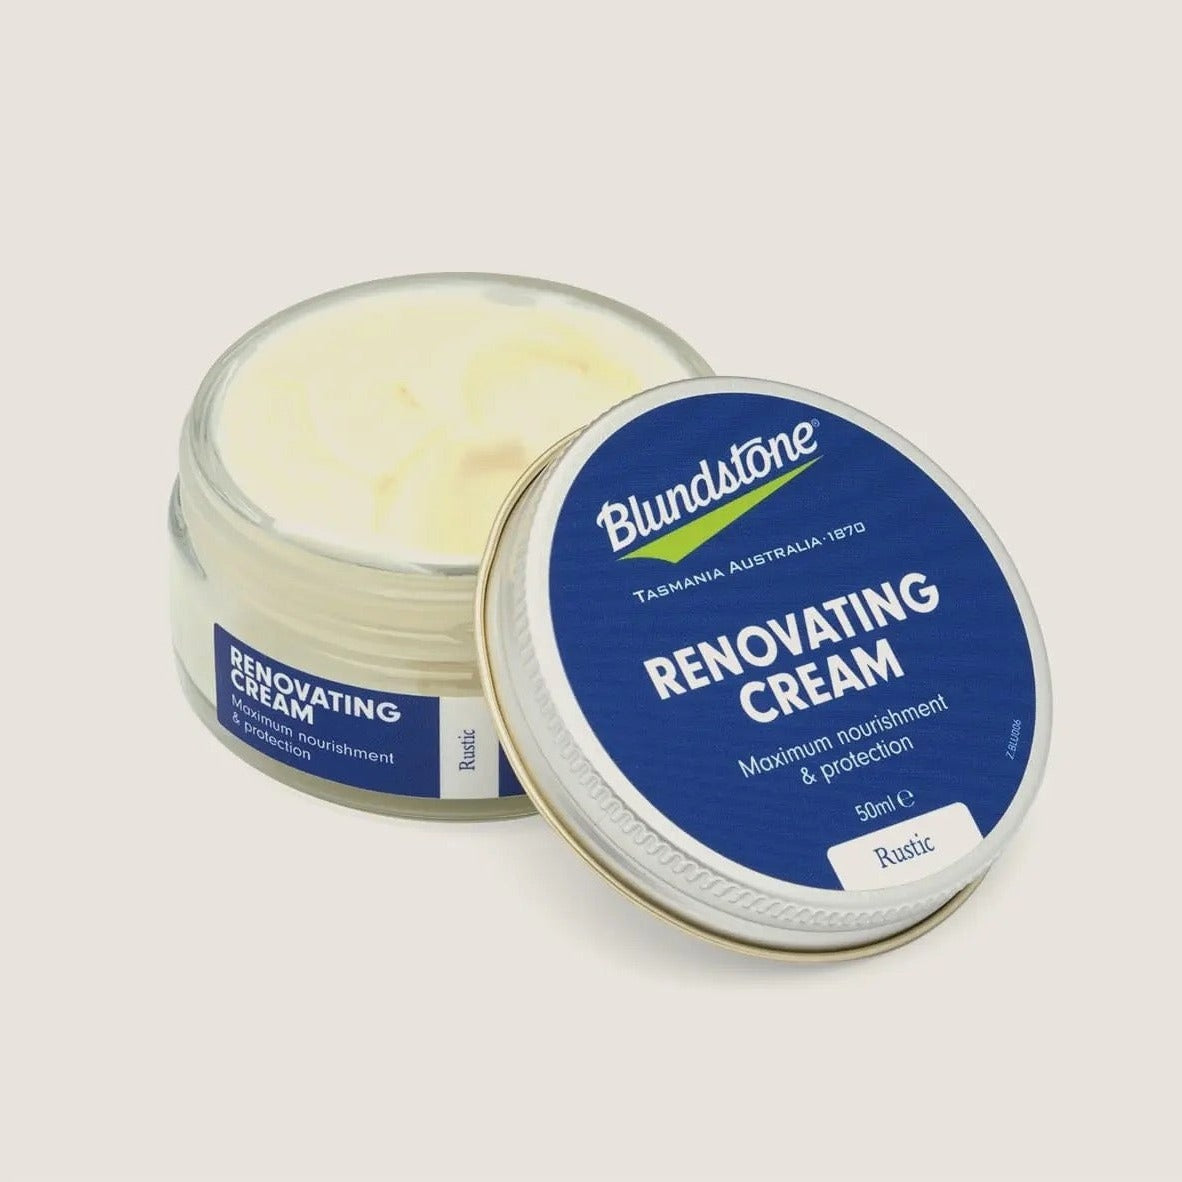 Blundstone - Renovating Cream - Rustic